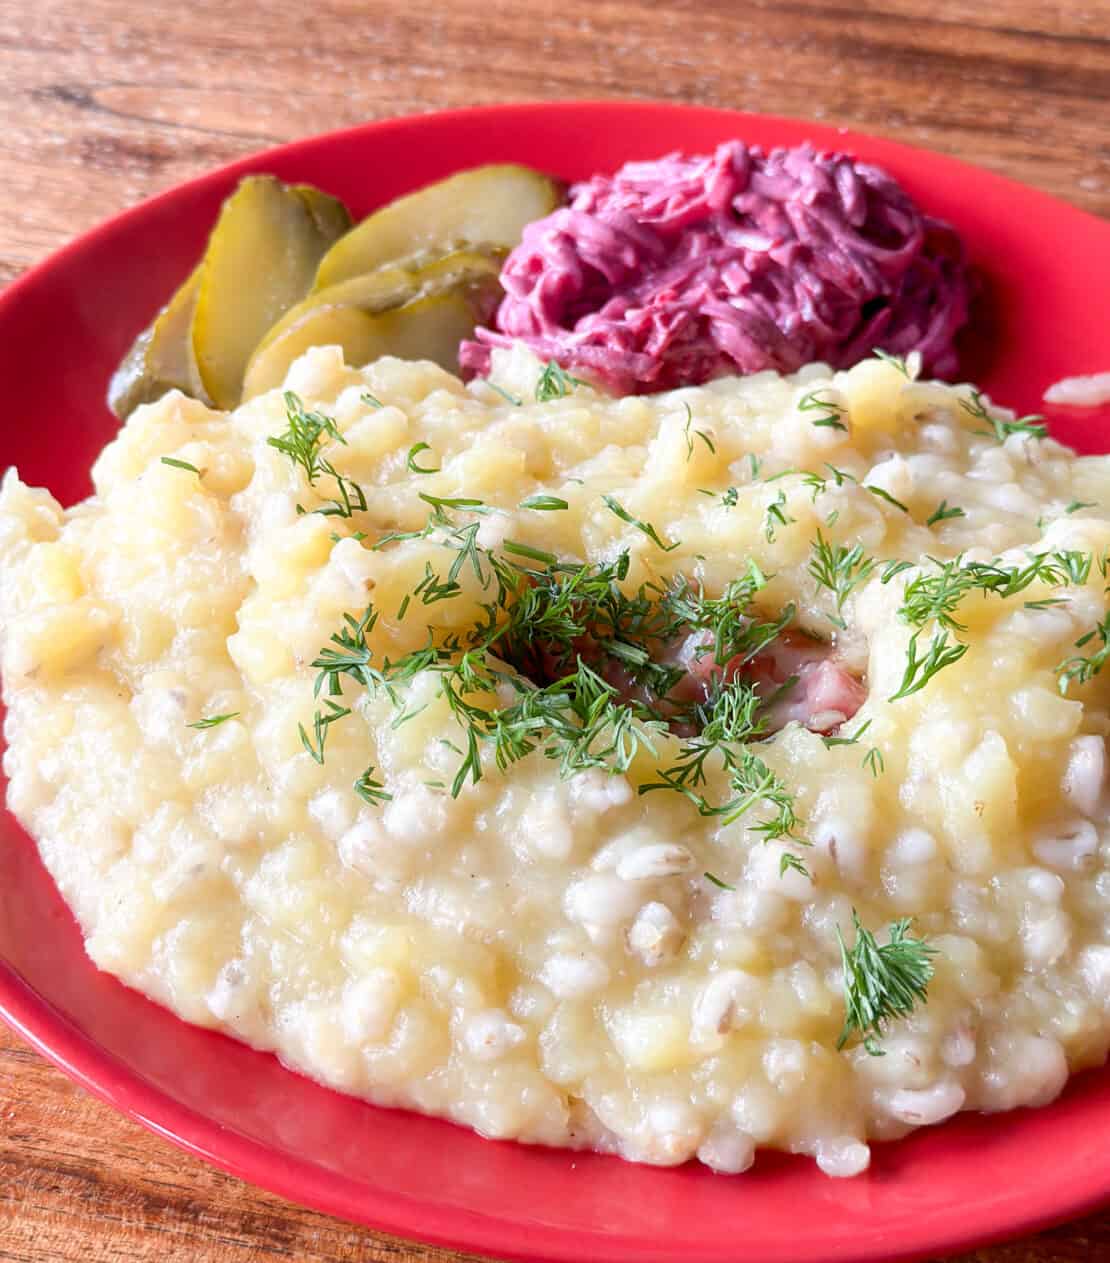 A plate of Mudpilger Porridge, a traditional Estonian dish 